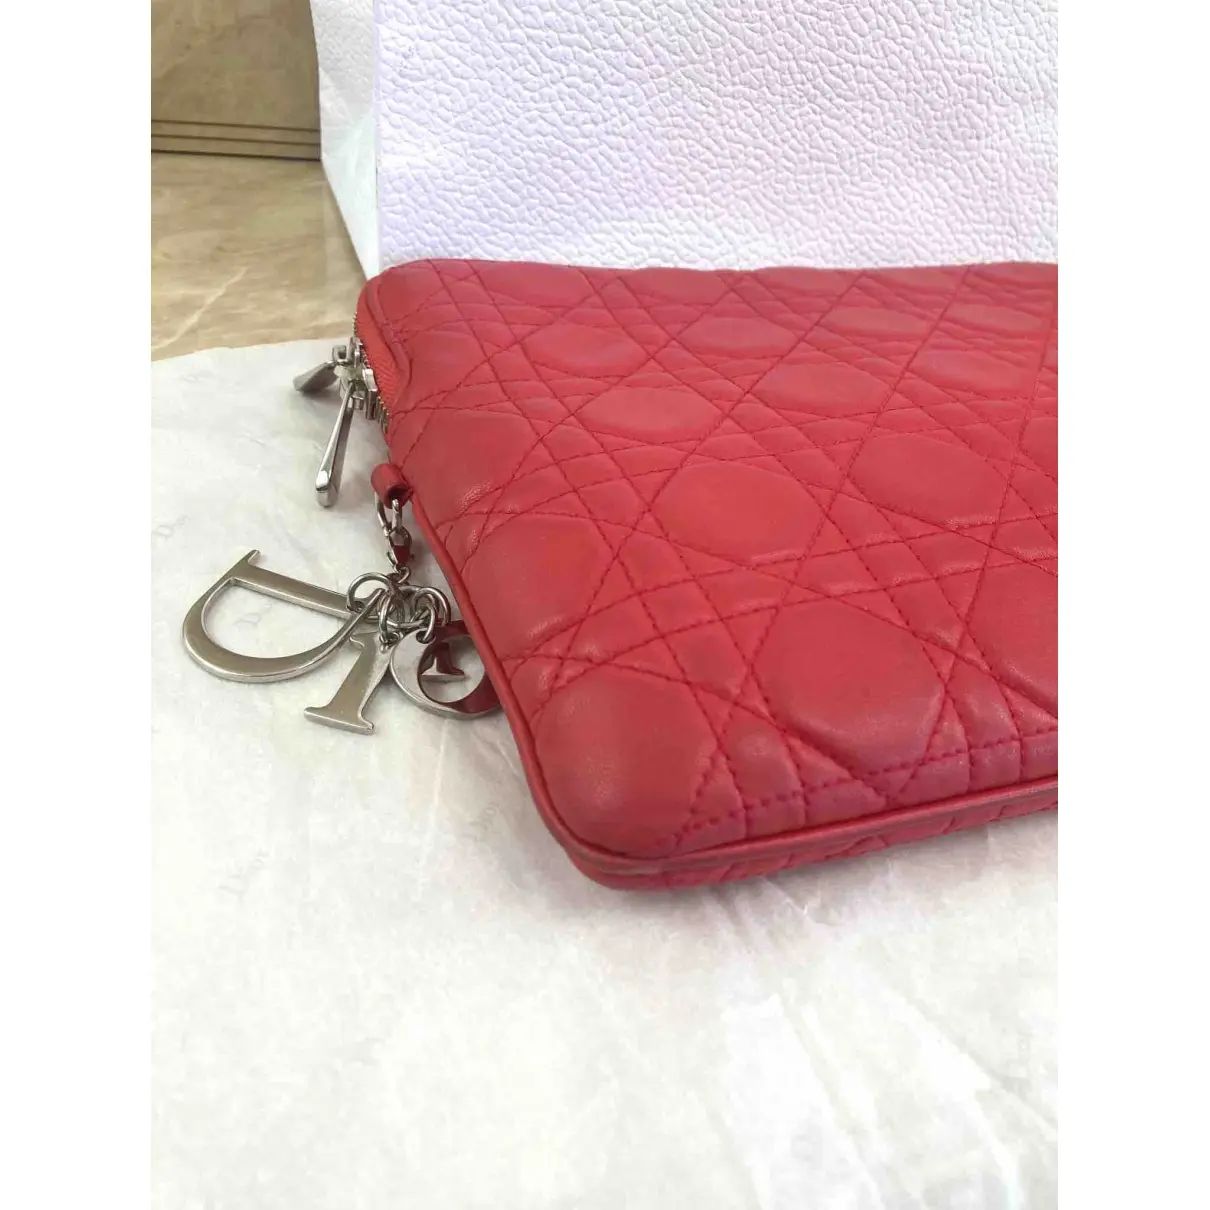 Buy Dior Lady Dior leather crossbody bag online